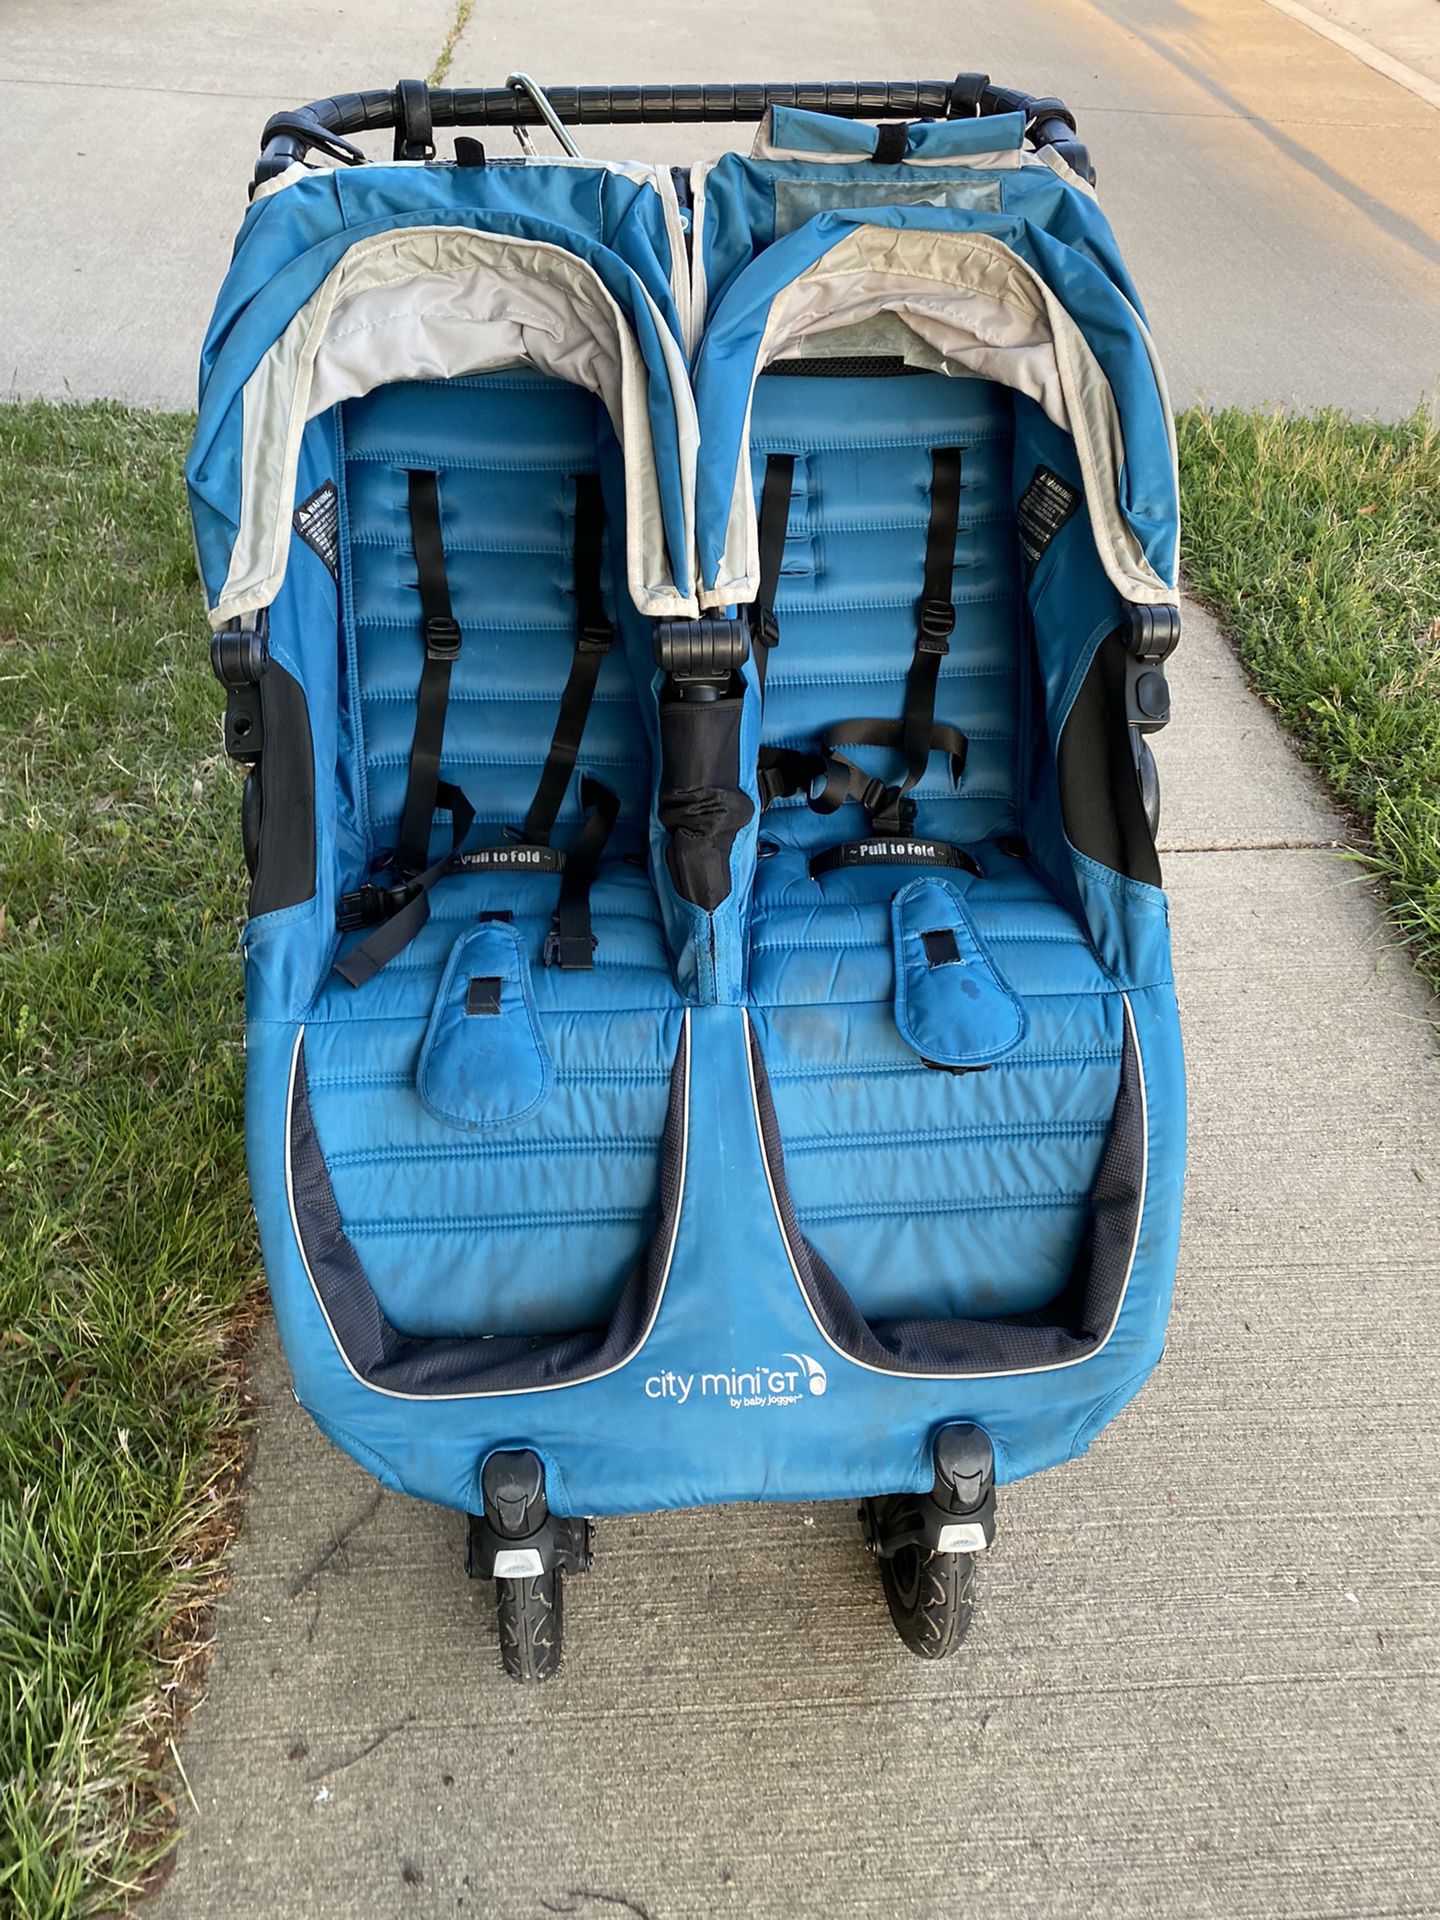 City Mini GT baby jogger double Stroller 